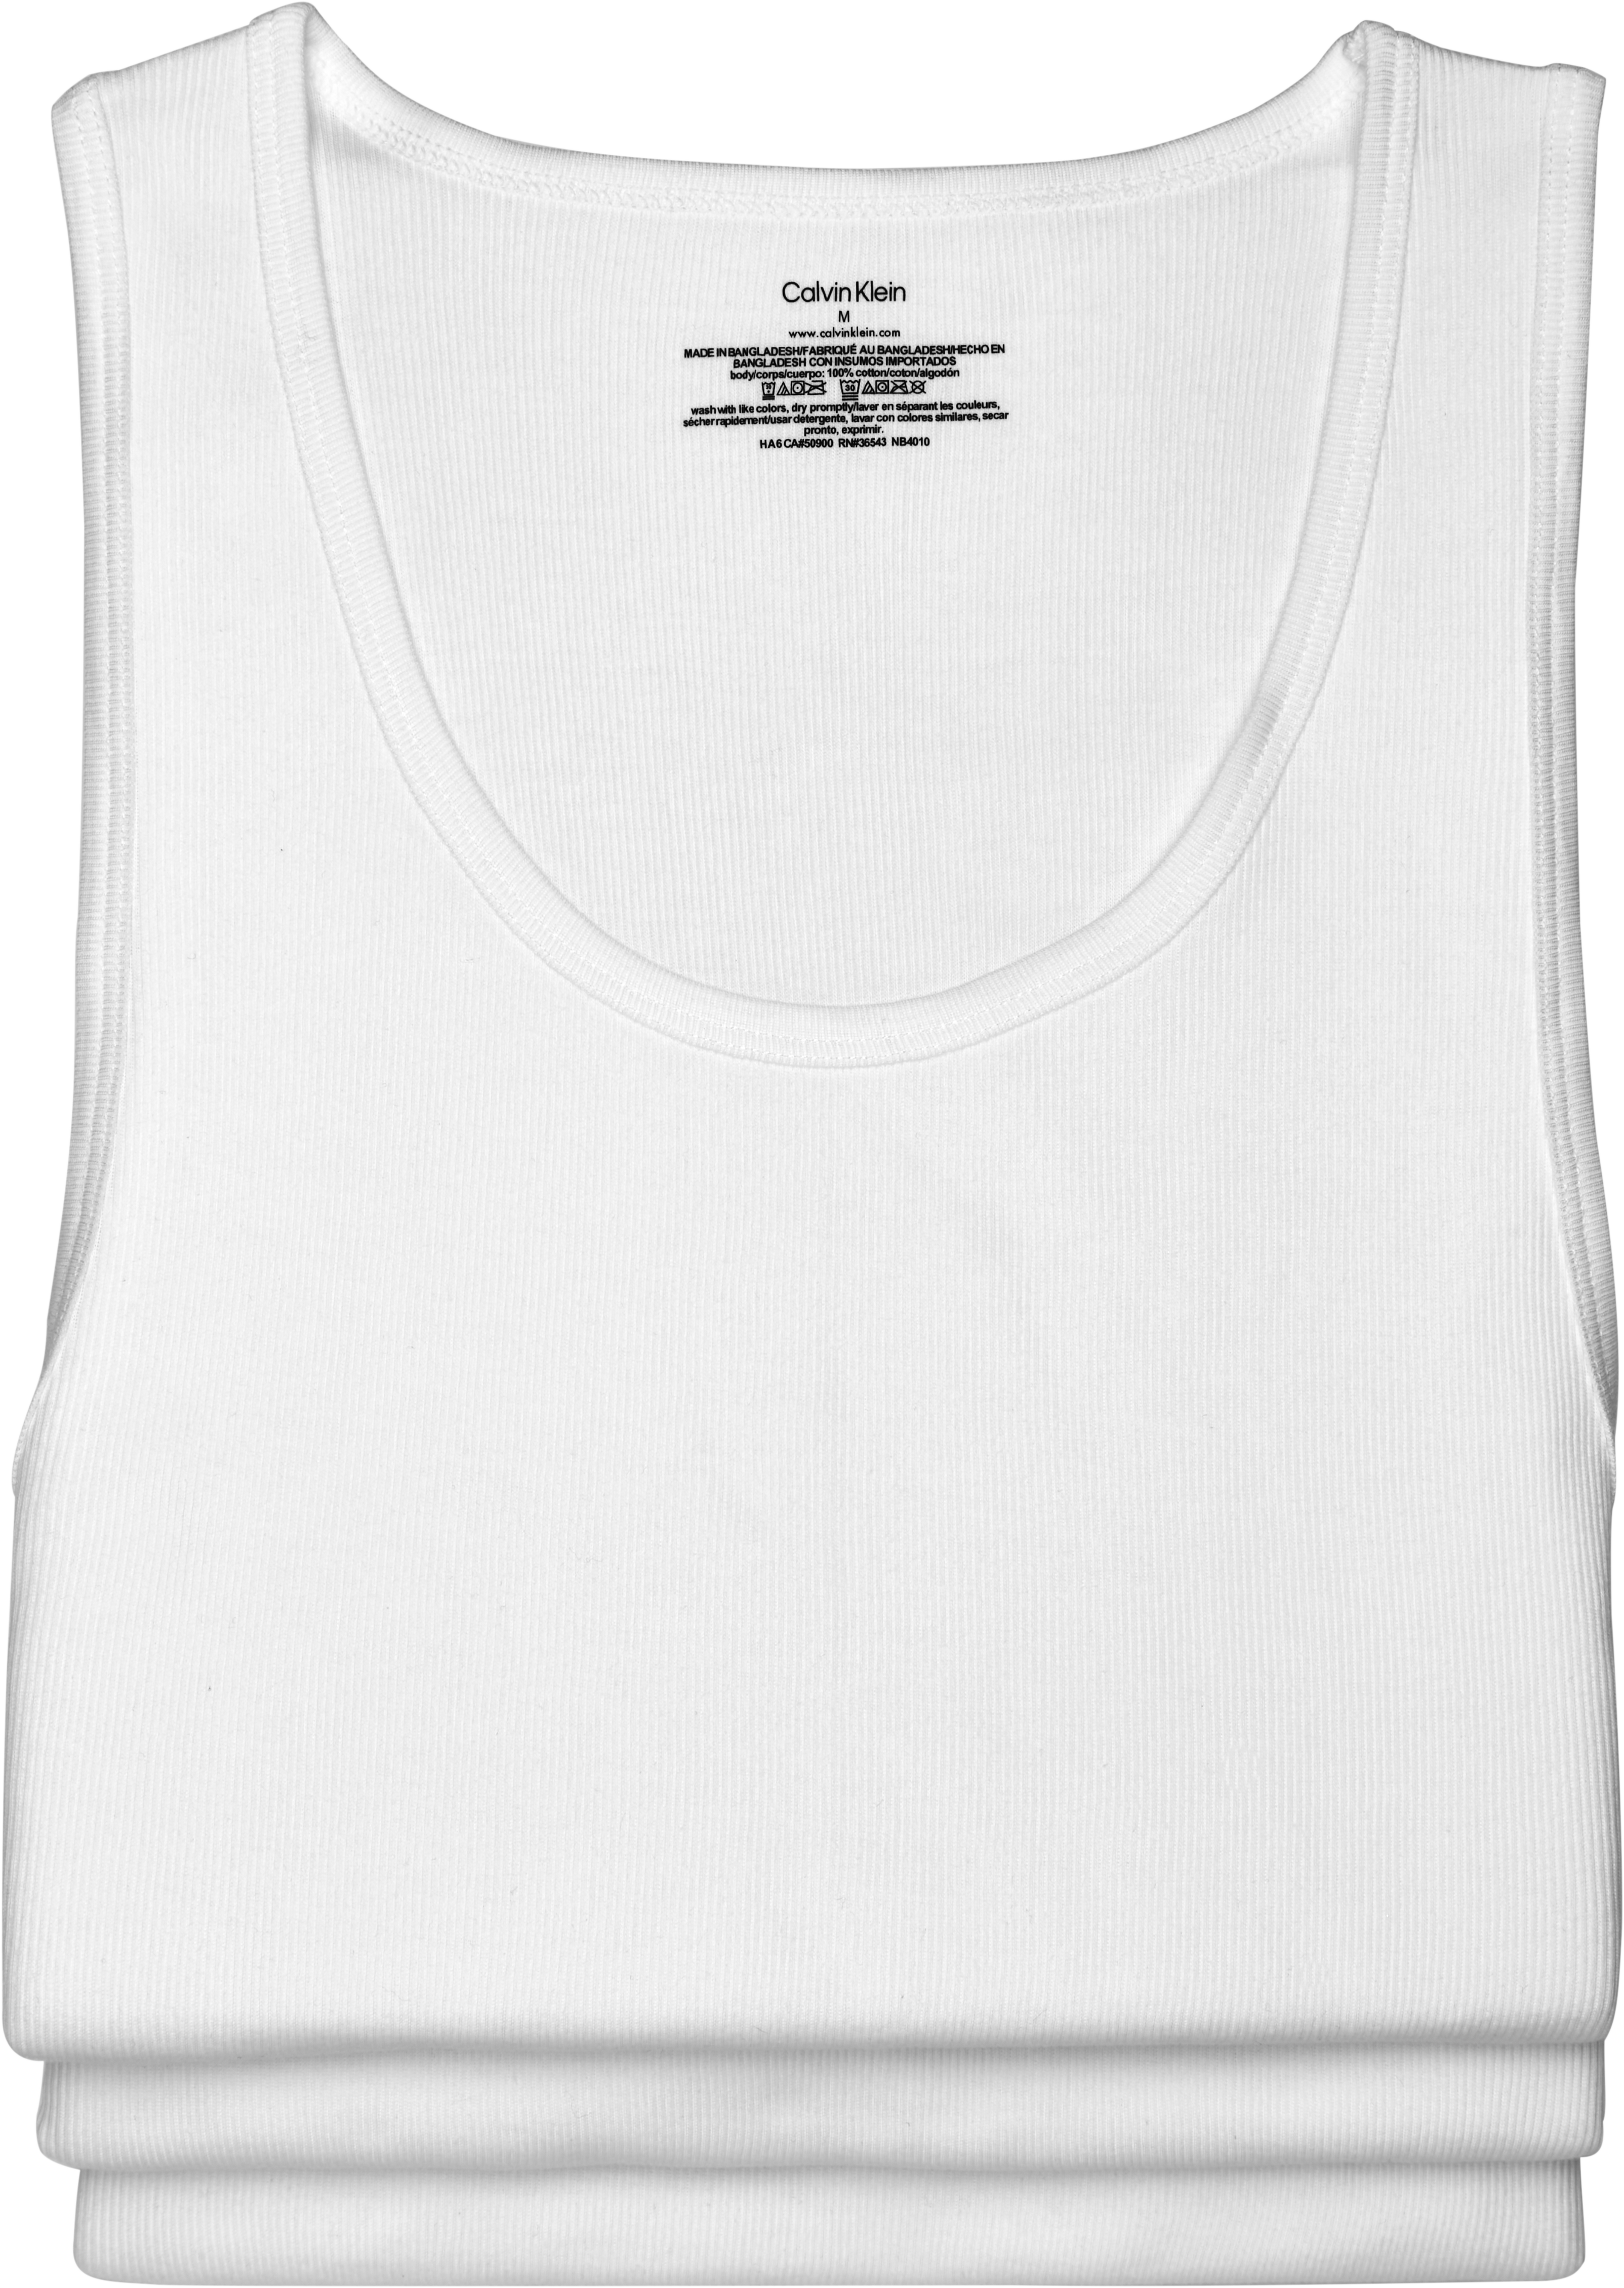 Calvin Klein Tank Top, 3-Pack, White